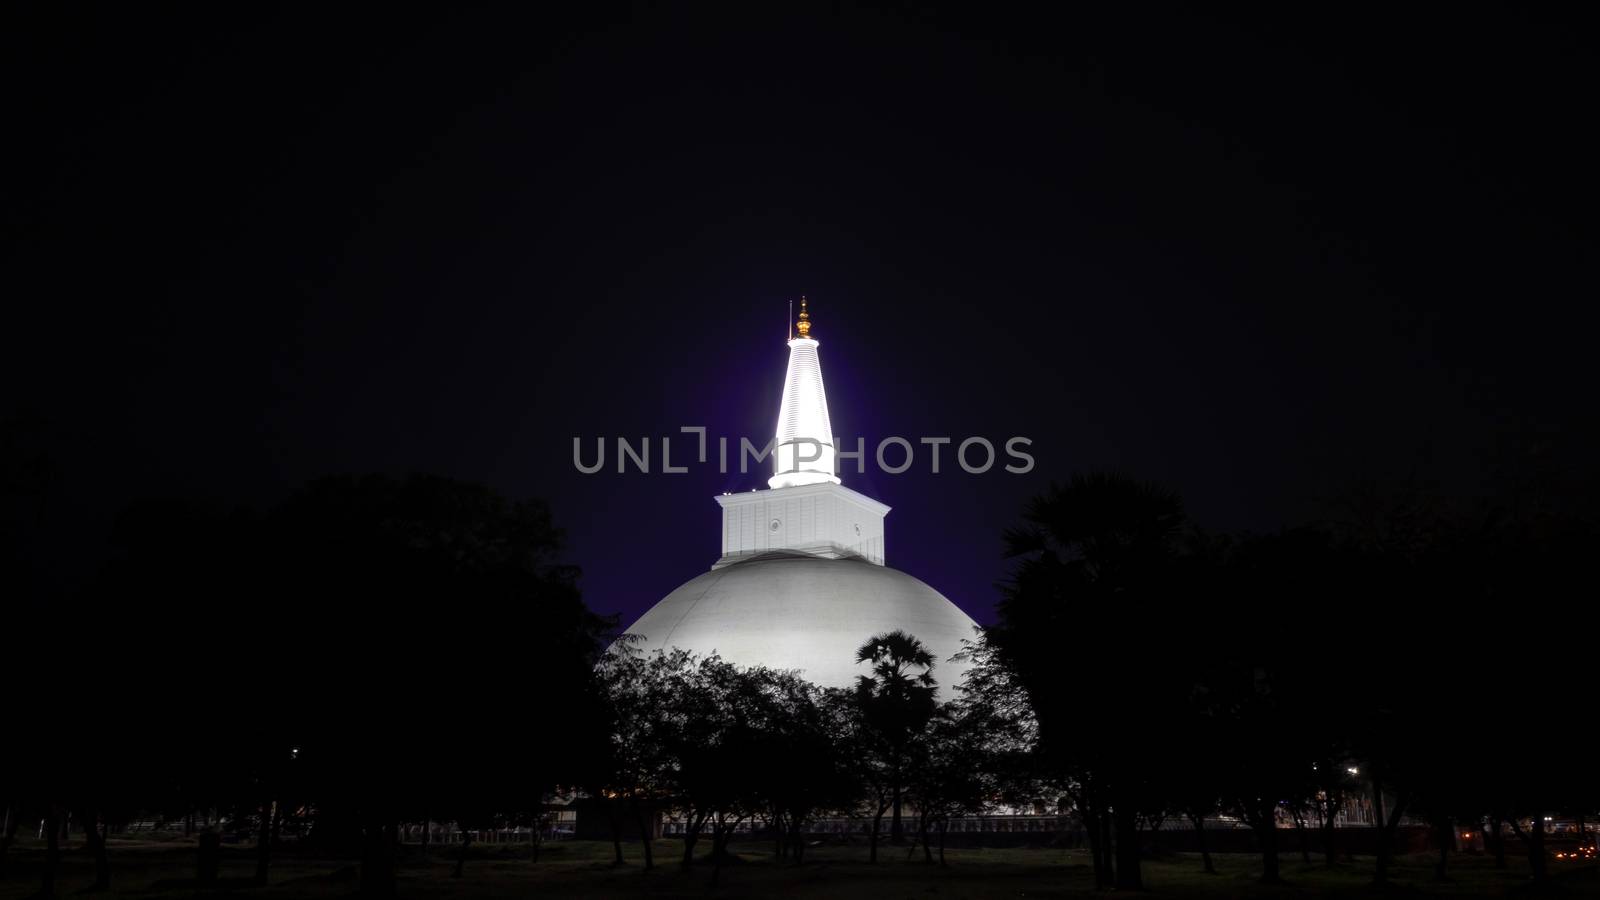 Ruwanwelisaya maha stupa night photograph, Anuradhapura Sri Lanka by nilanka